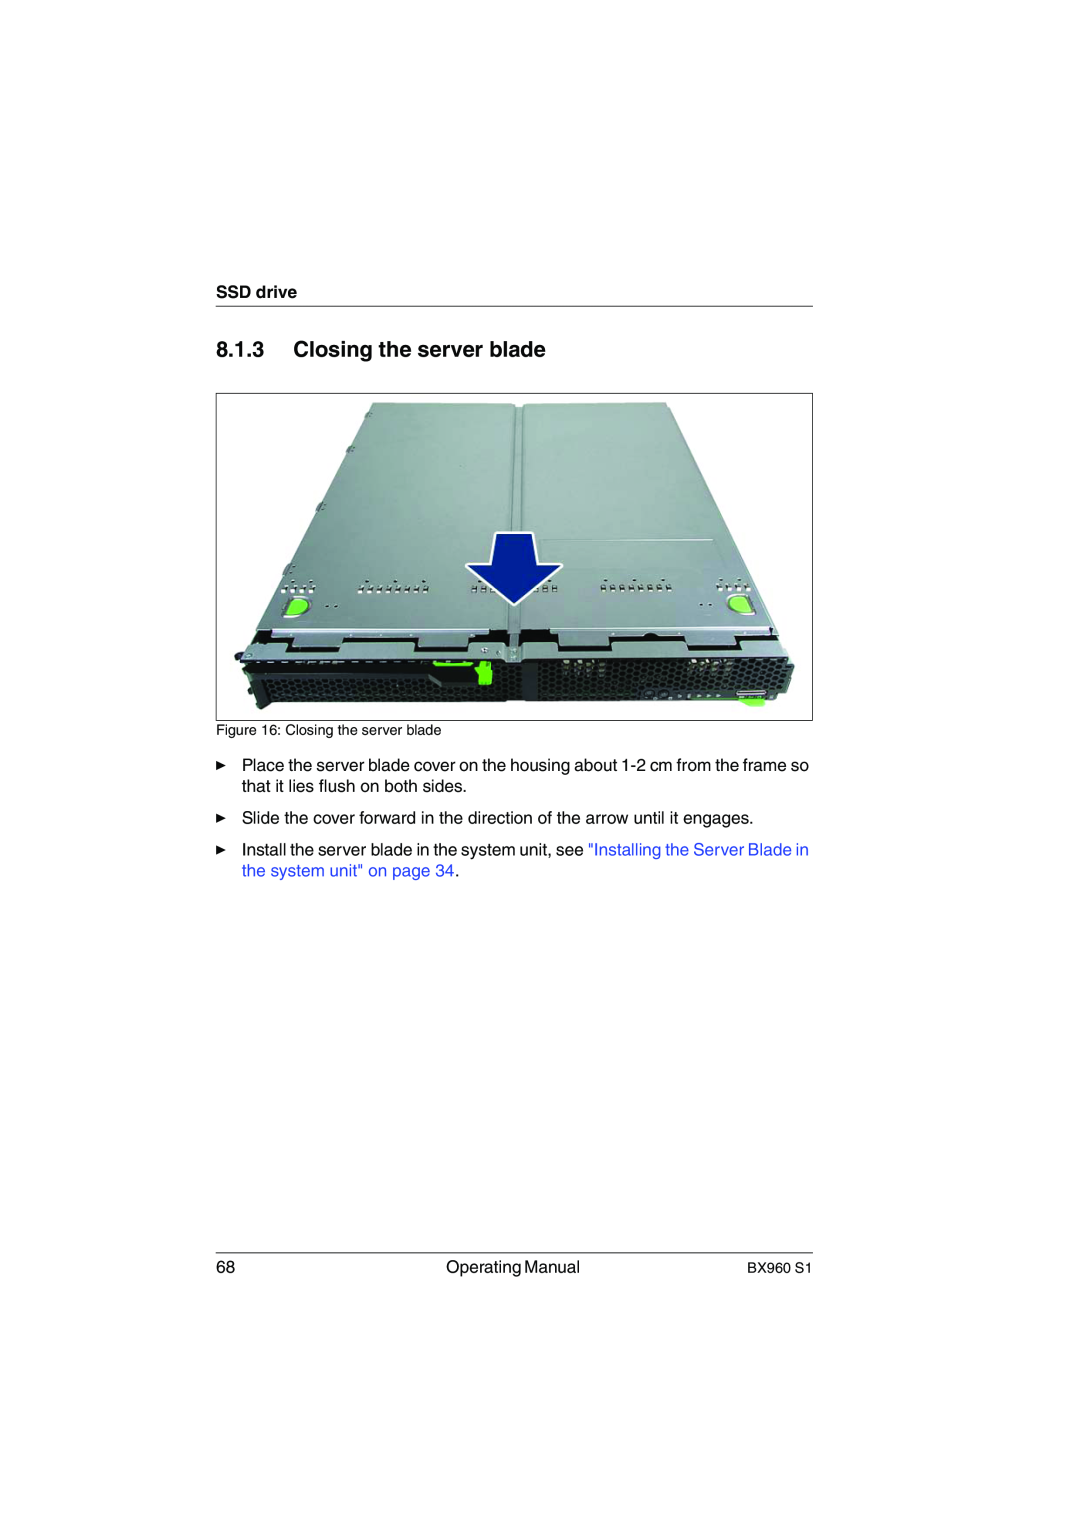 Fujitsu BX960 S1 manual Closing the server blade, SSD drive 